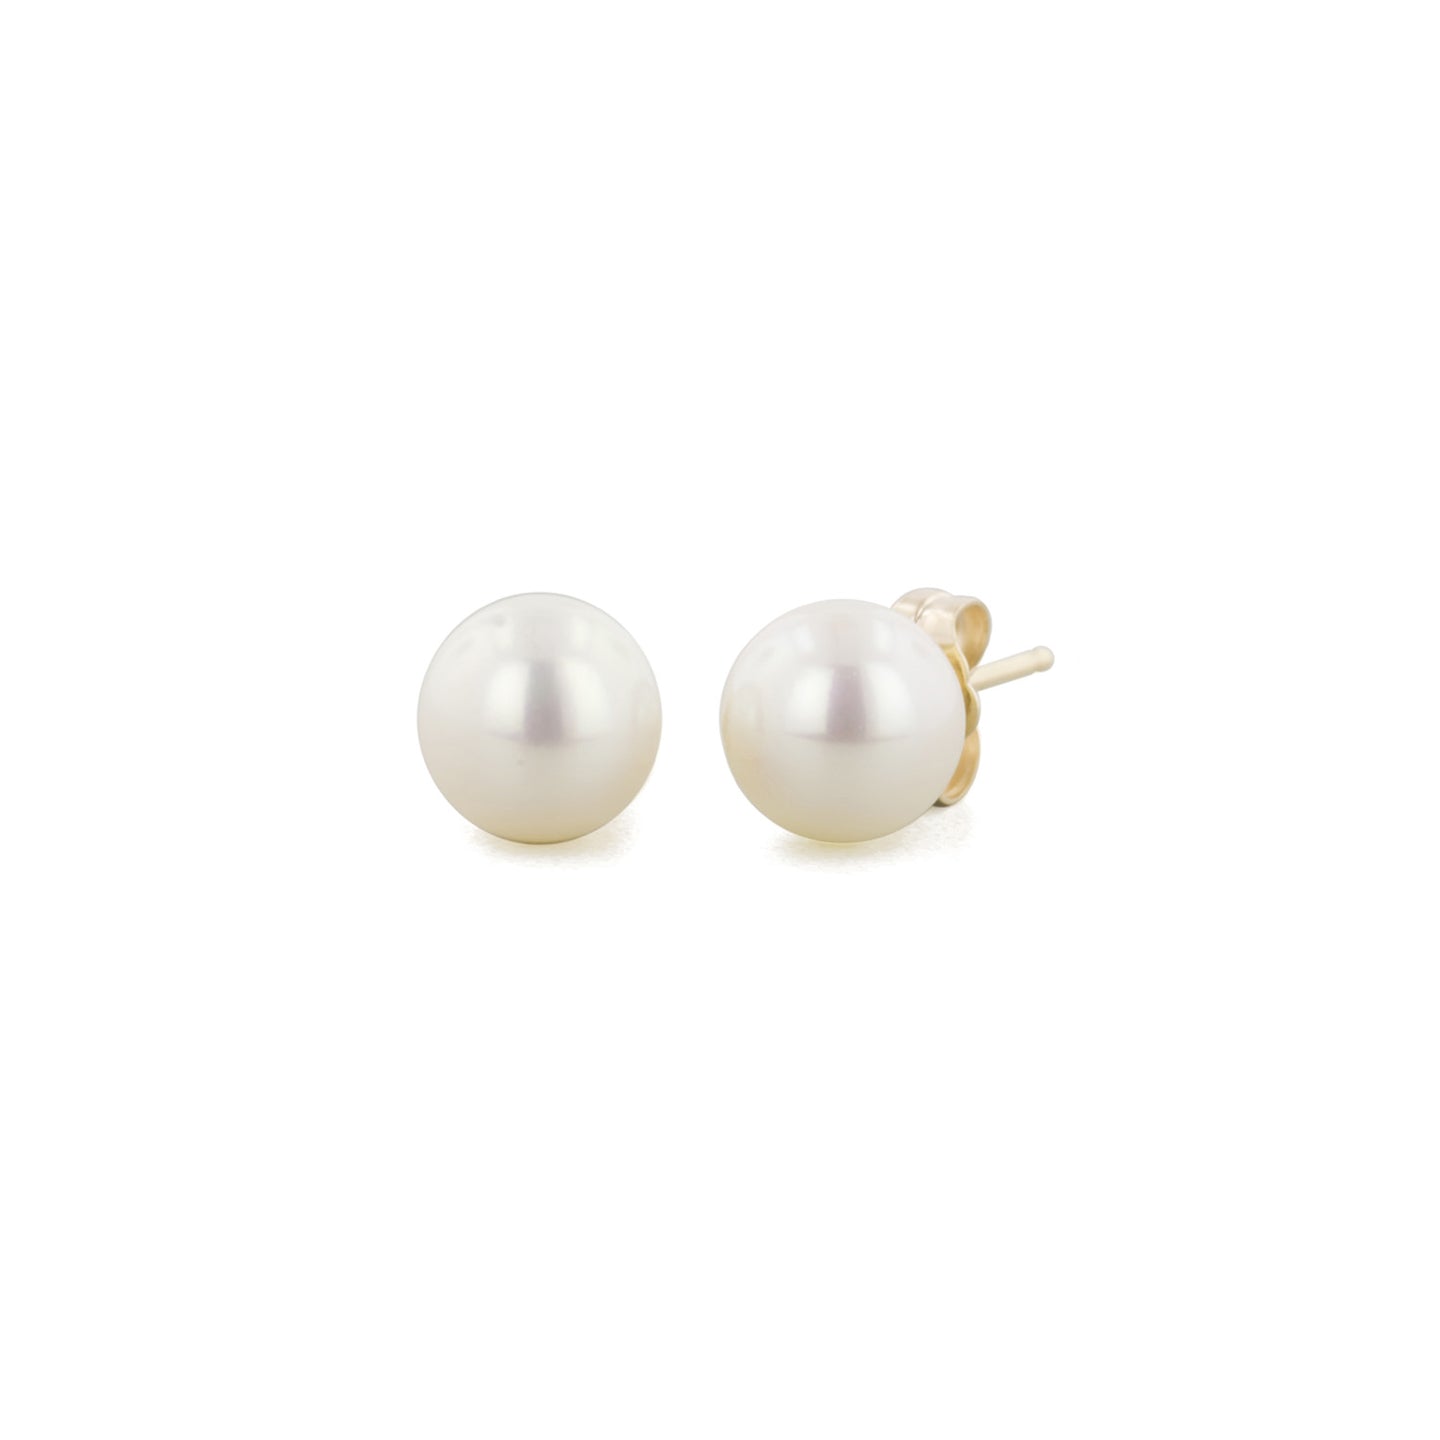 Sabel Pearl Near Round Pearl Earrings in 6mm